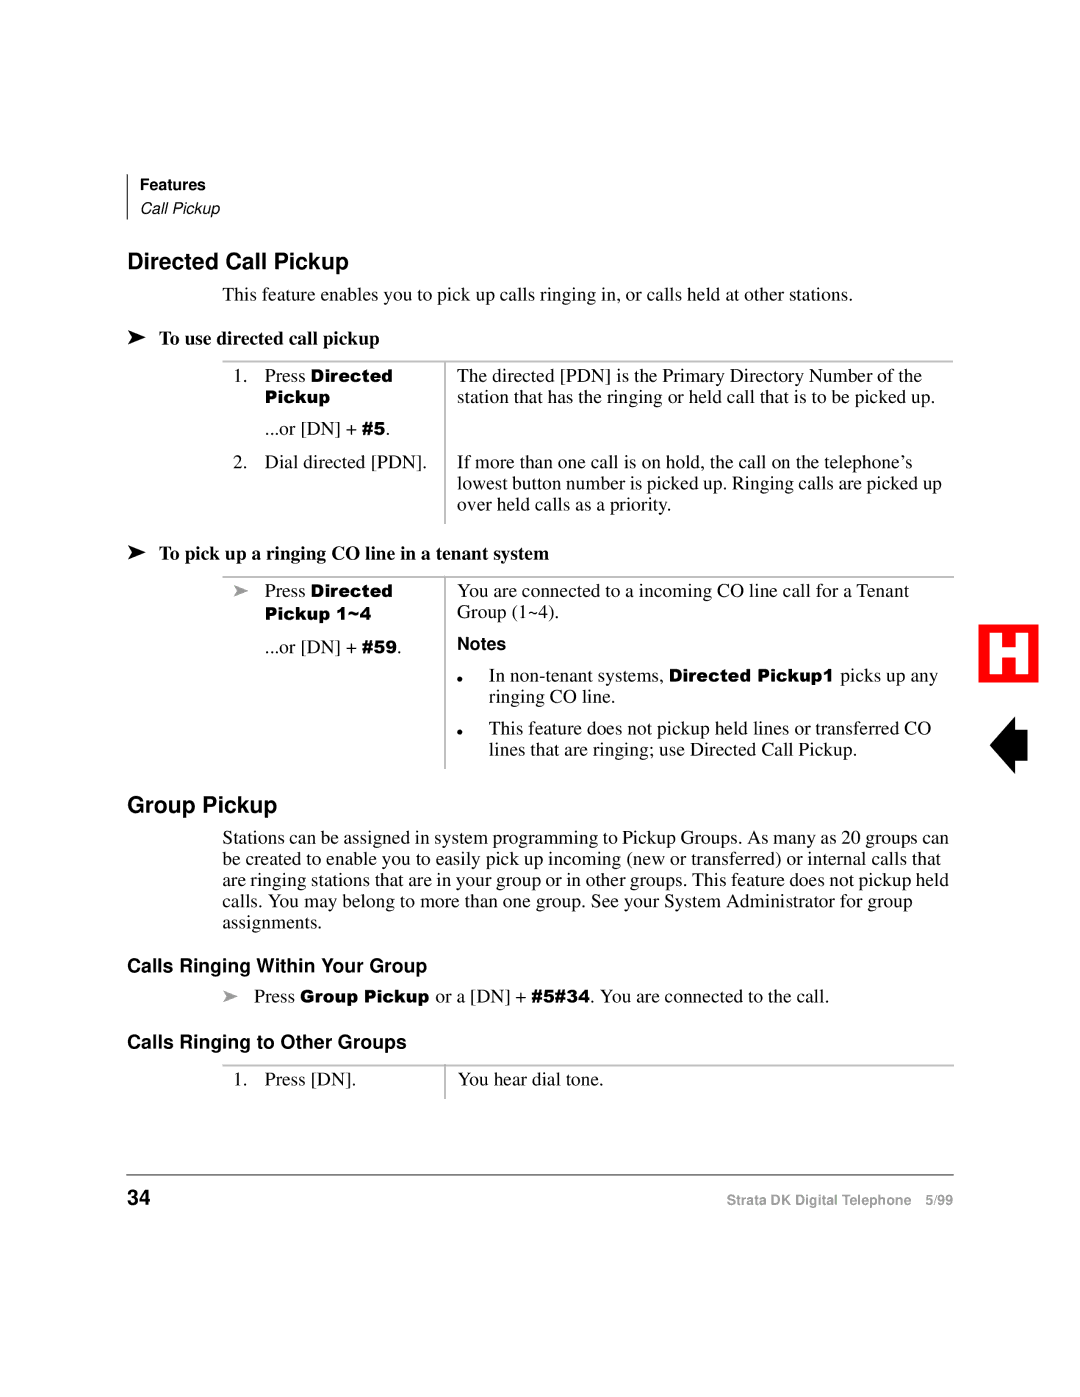 Toshiba Digital Telephone manual Directed Call Pickup, Group Pickup, To use directed call pickup 